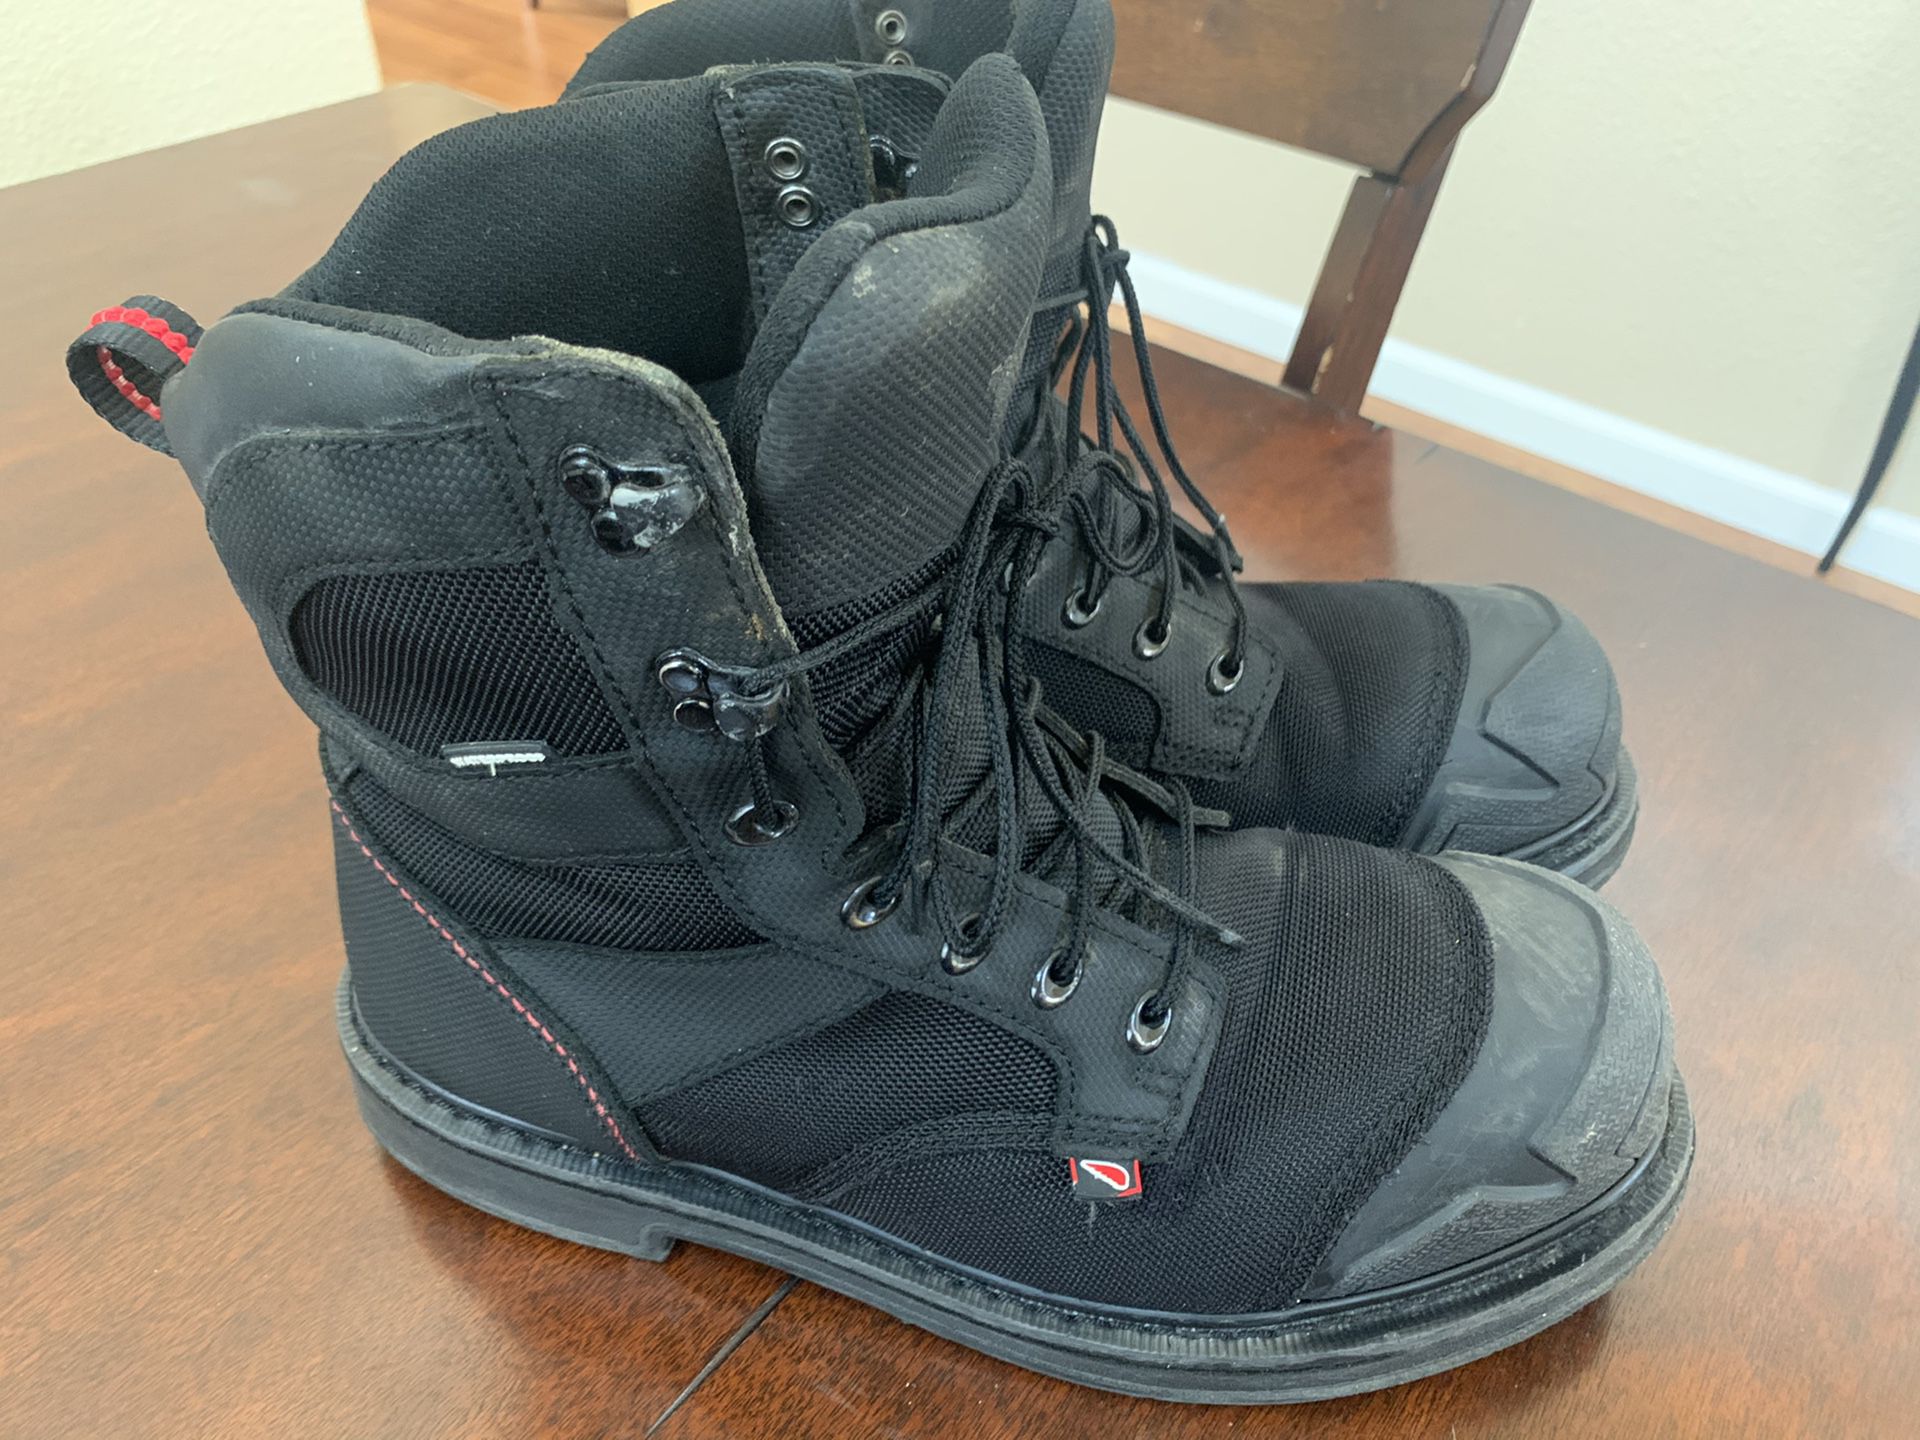 Red Wings boots 8” Waterproof